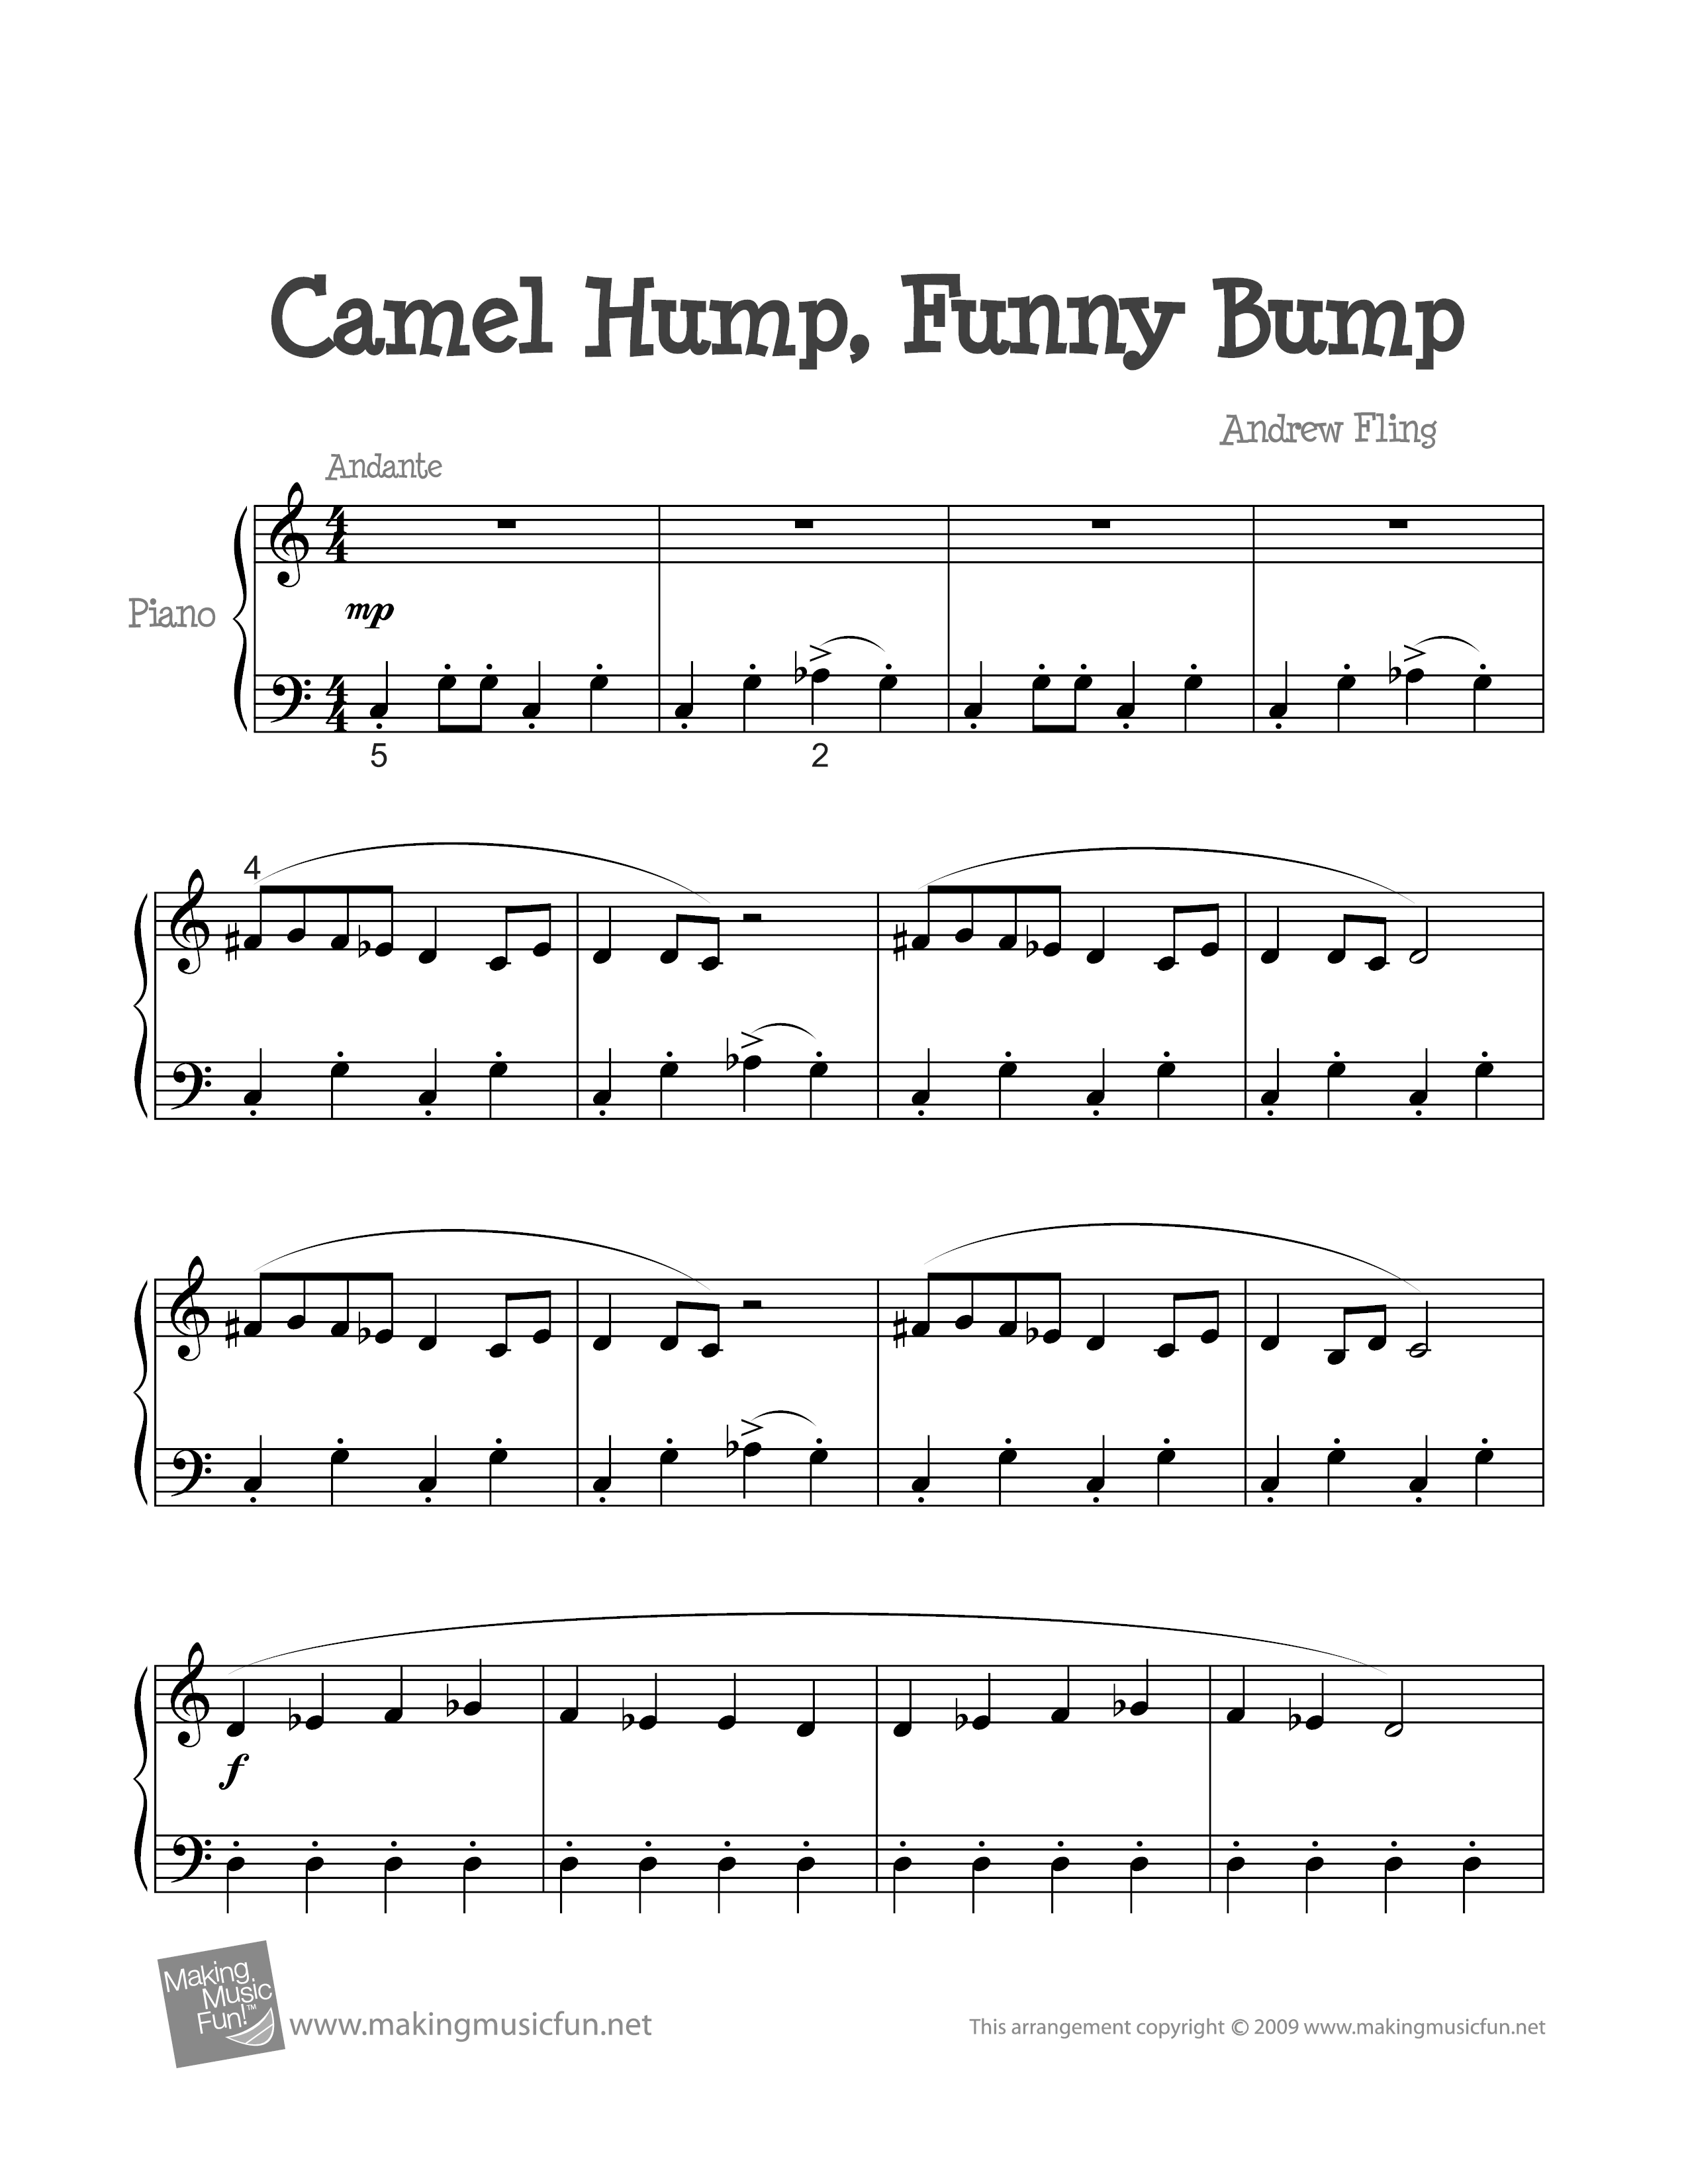 Camel Hump, Funny Bumpピアノ譜